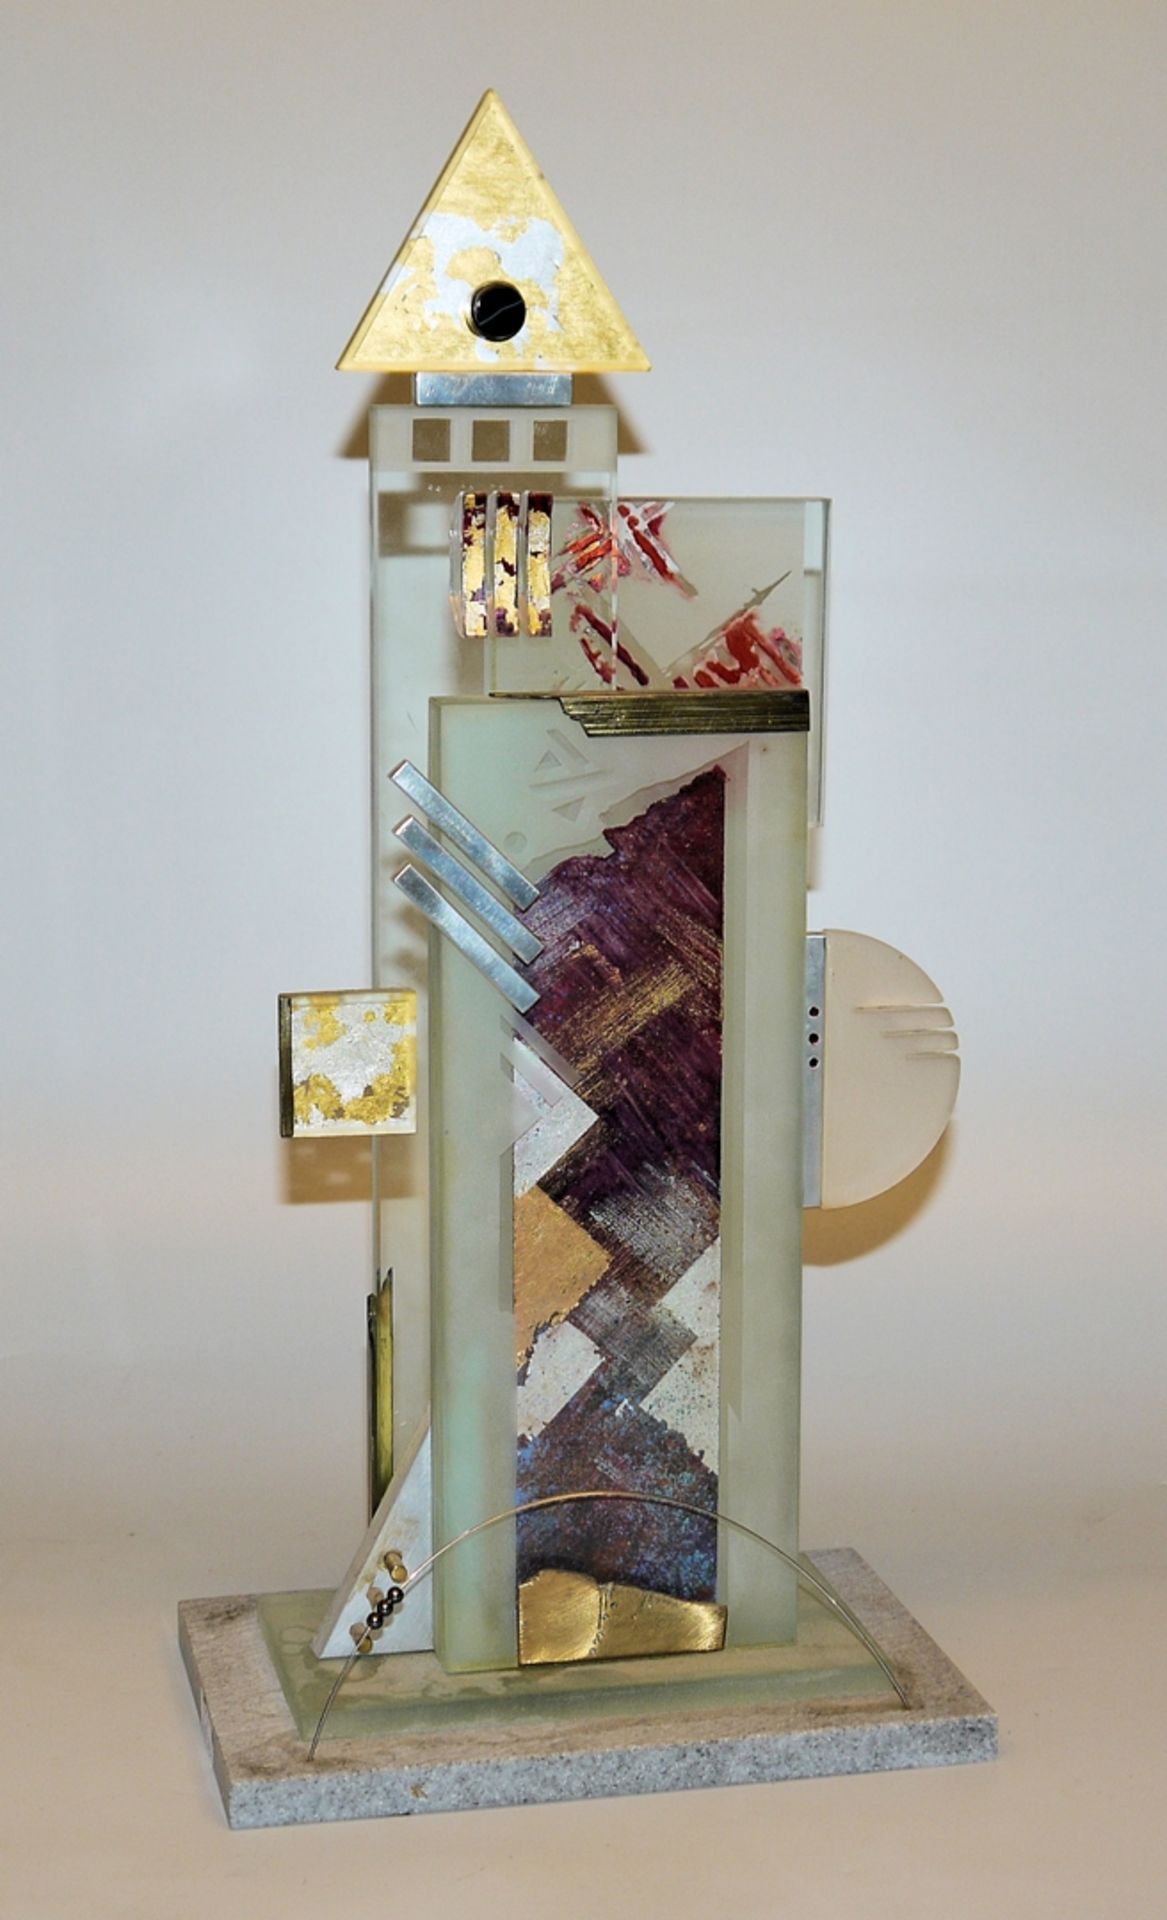 Alain Lerolle, Totem, glass sculpture from 1993, unique